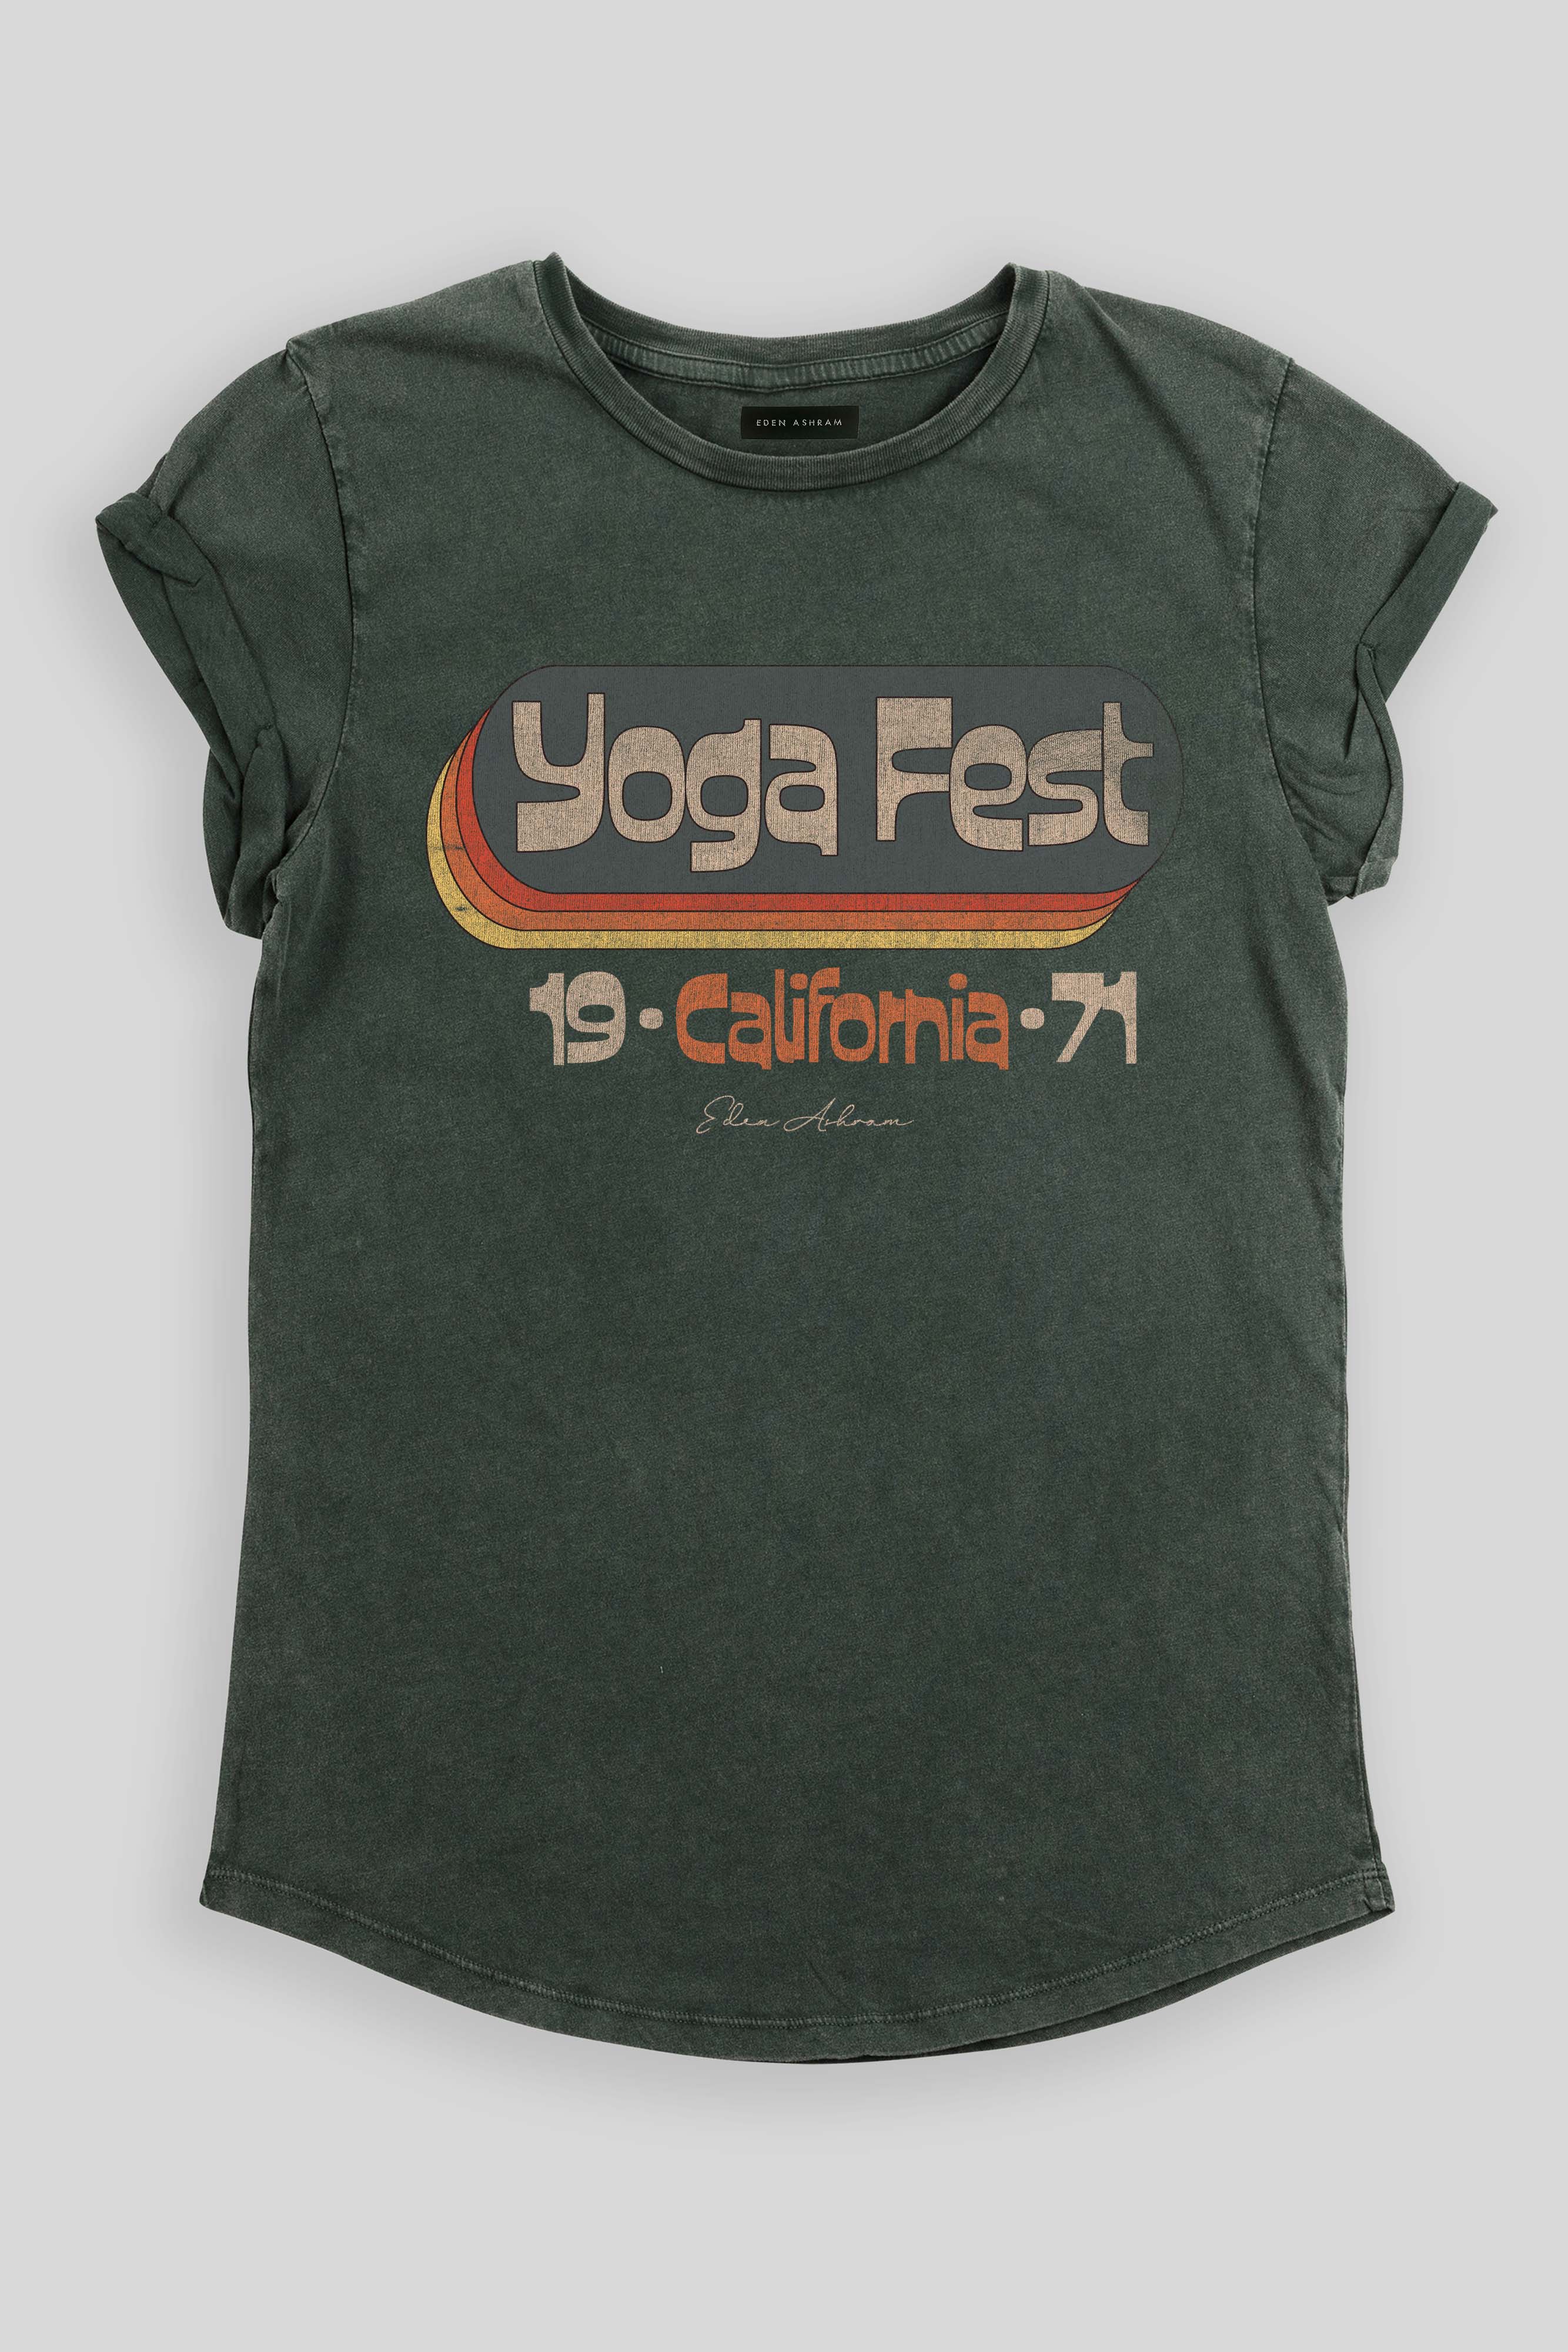 EDEN ASHRAM Yoga Fest Stonewash Rolled Sleeve Tour T-Shirt Stonewash Green